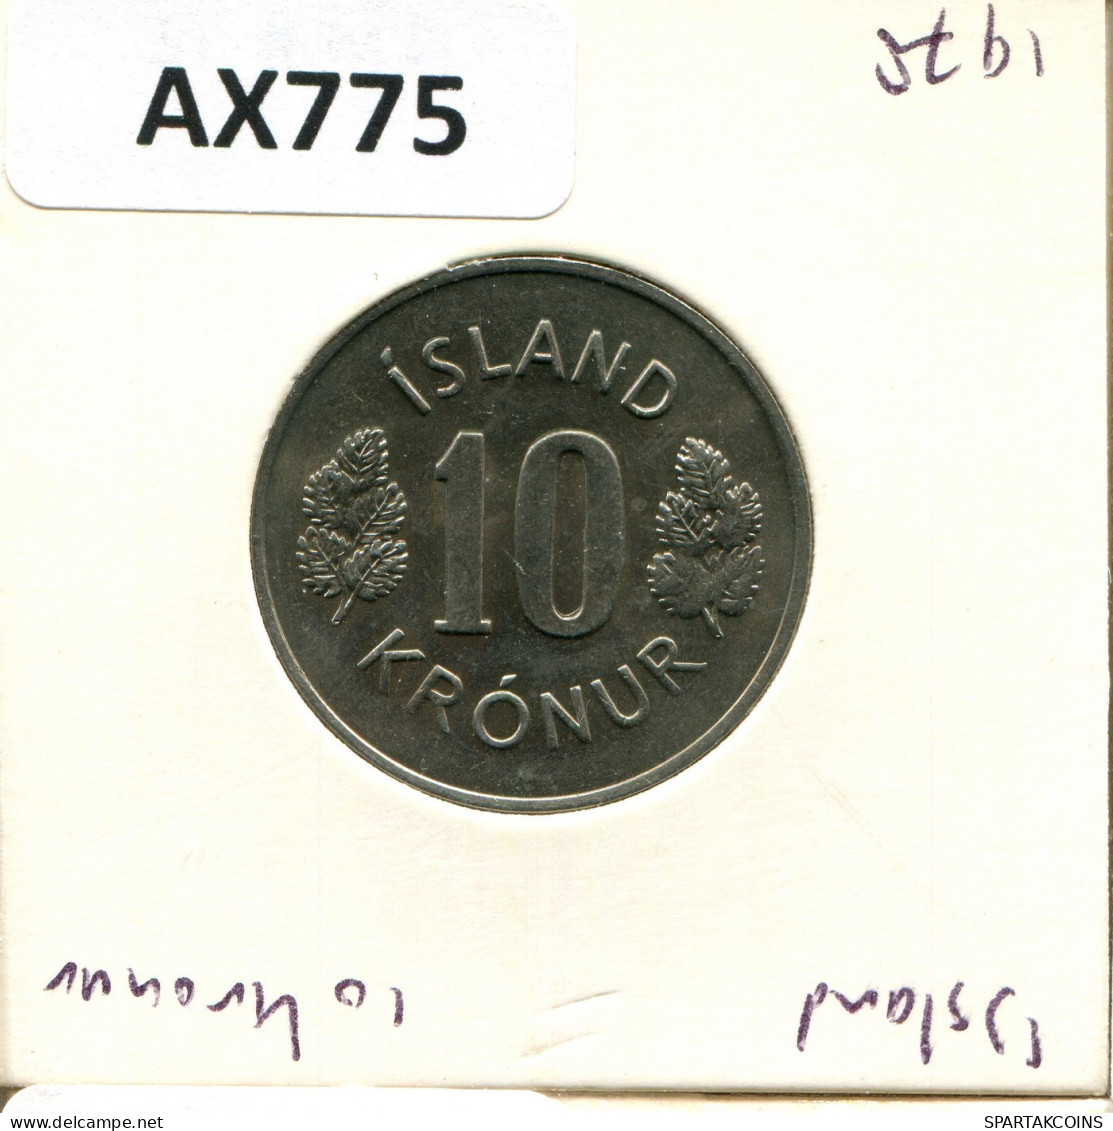 10 KRONUR 1978 ISLANDIA ICELAND Moneda #AX775.E.A - Islande